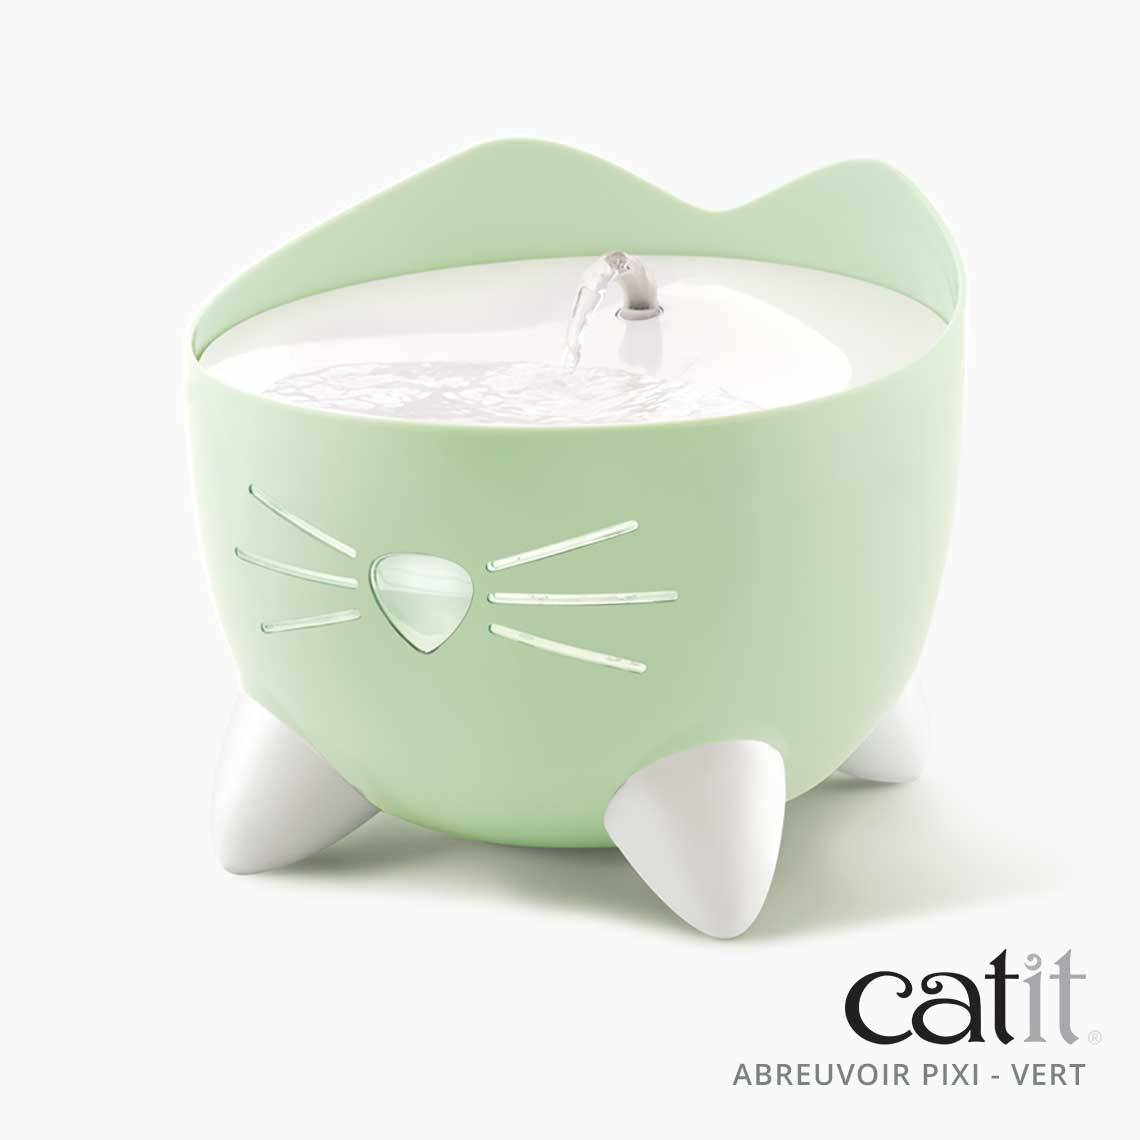 https://api.auberdog.com/storage/products/119222/chats-cat-it-fontaine-a-eau-chat-design-pompe-silencieuse-5363398279.jpeg